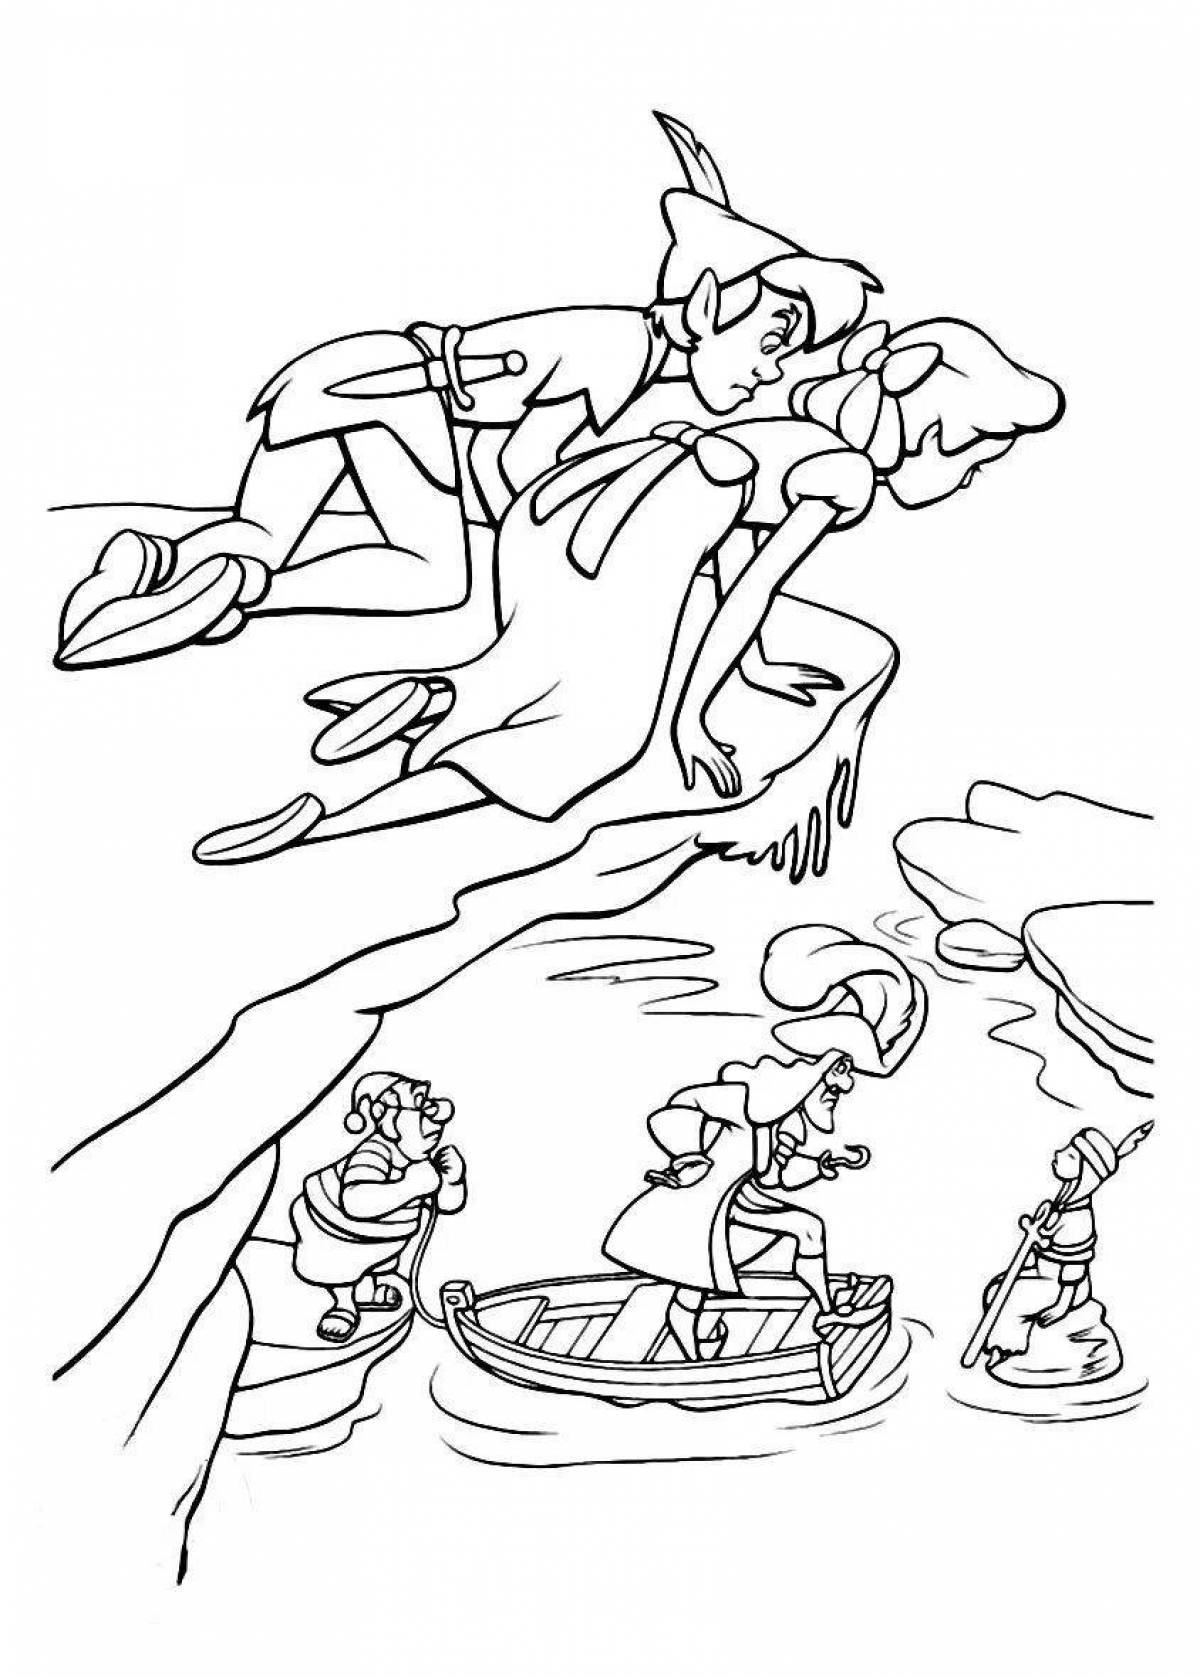 Charming peter pan coloring page